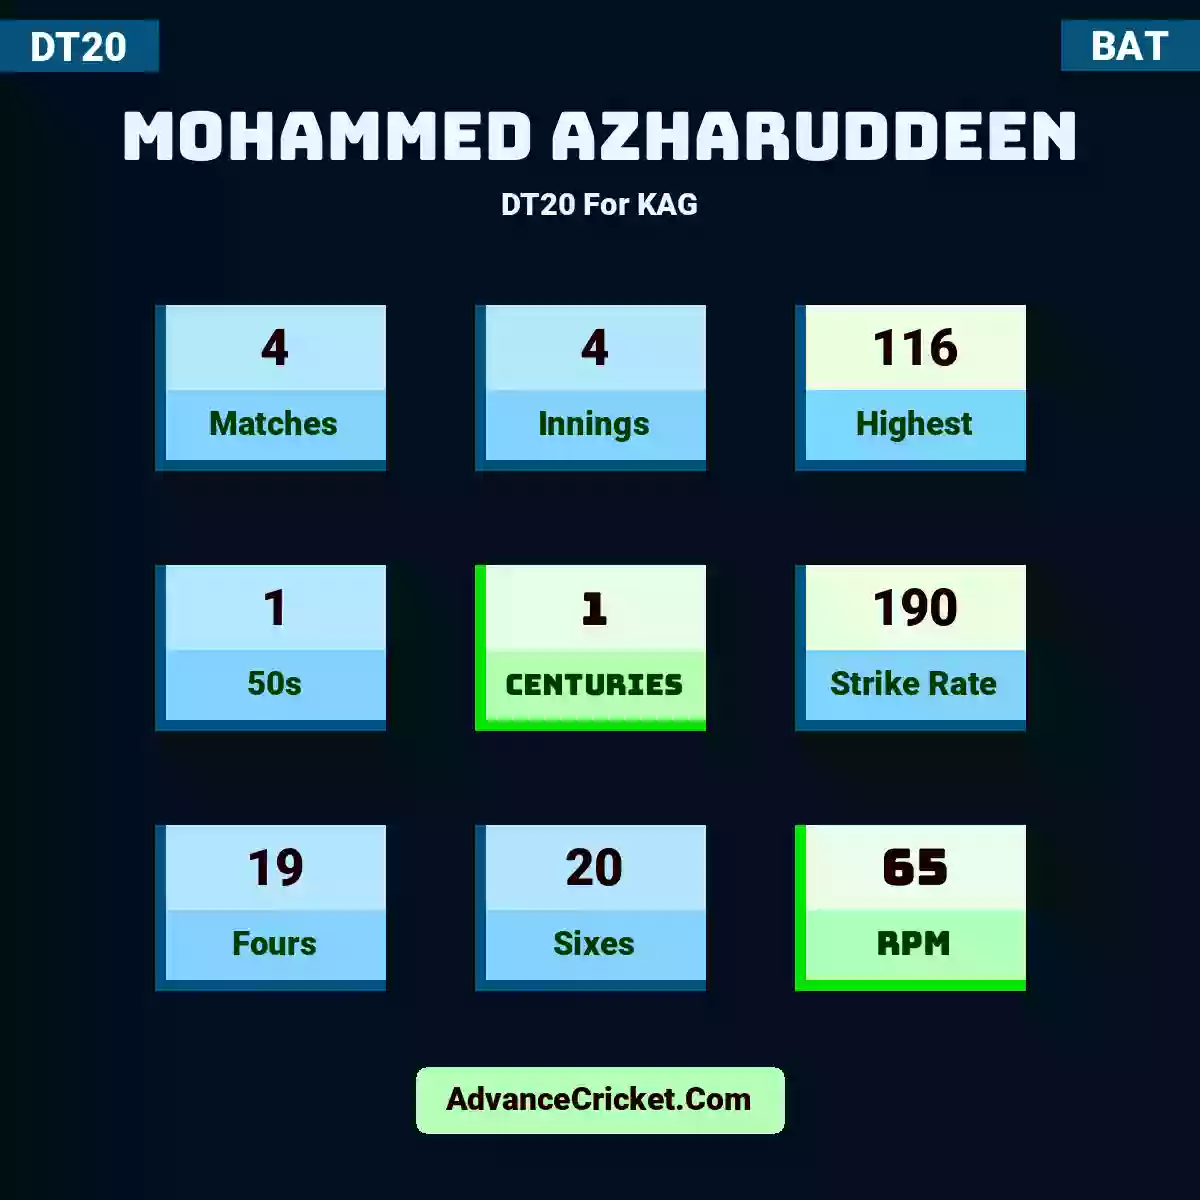 Mohammed Azharuddeen DT20  For KAG, Mohammed Azharuddeen played 4 matches, scored 116 runs as highest, 1 half-centuries, and 1 centuries, with a strike rate of 190. M.Azharuddeen hit 19 fours and 20 sixes, with an RPM of 65.